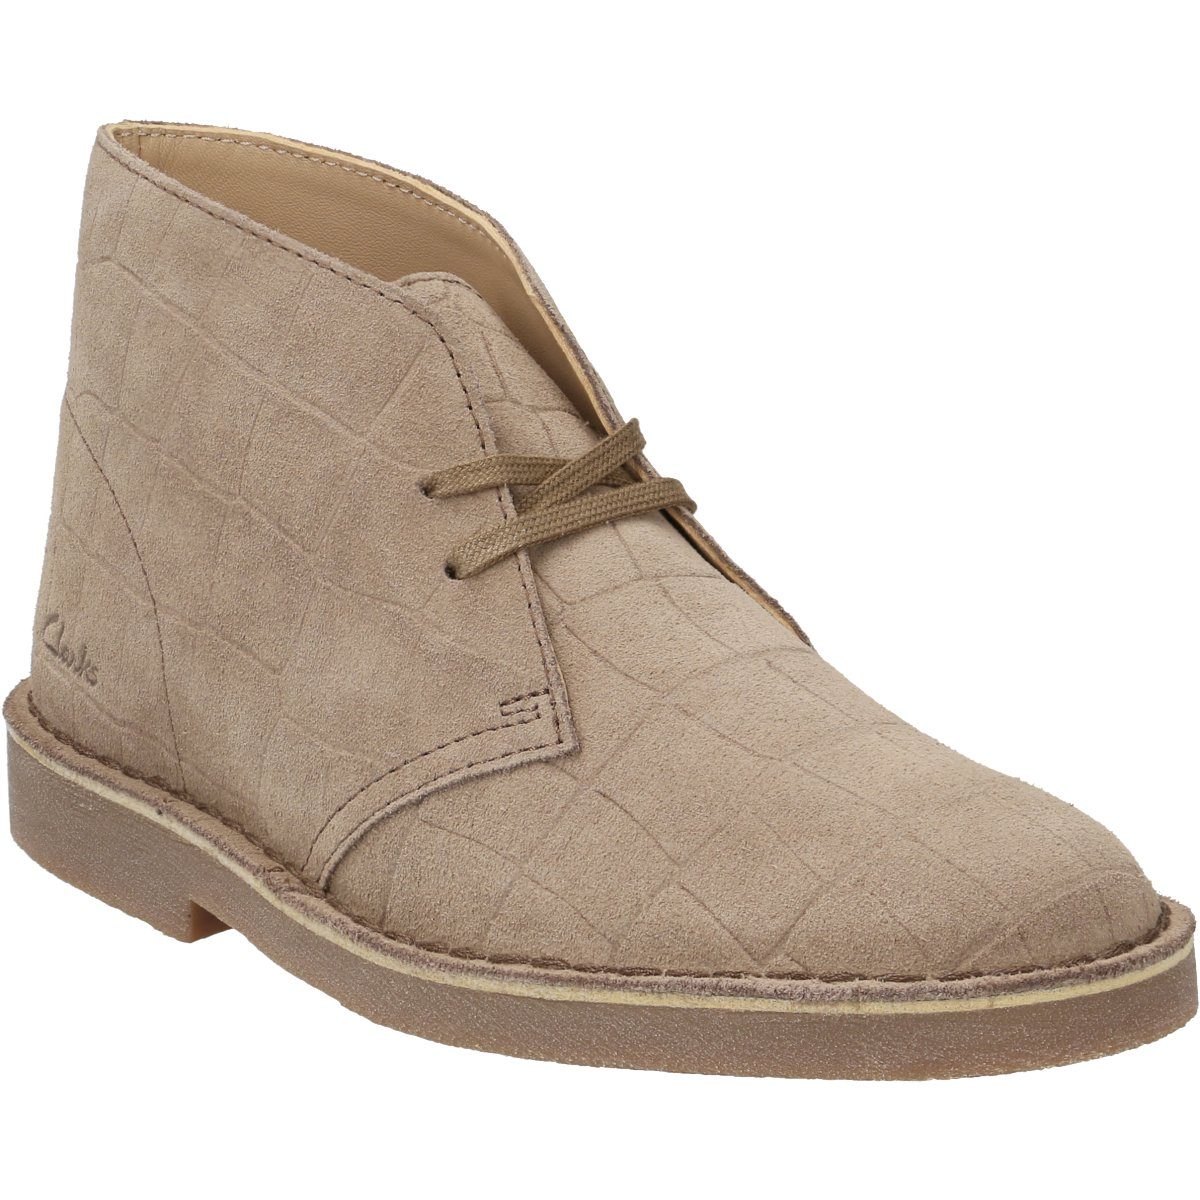 Clarks Desert Stiefel Boot 4 26161524